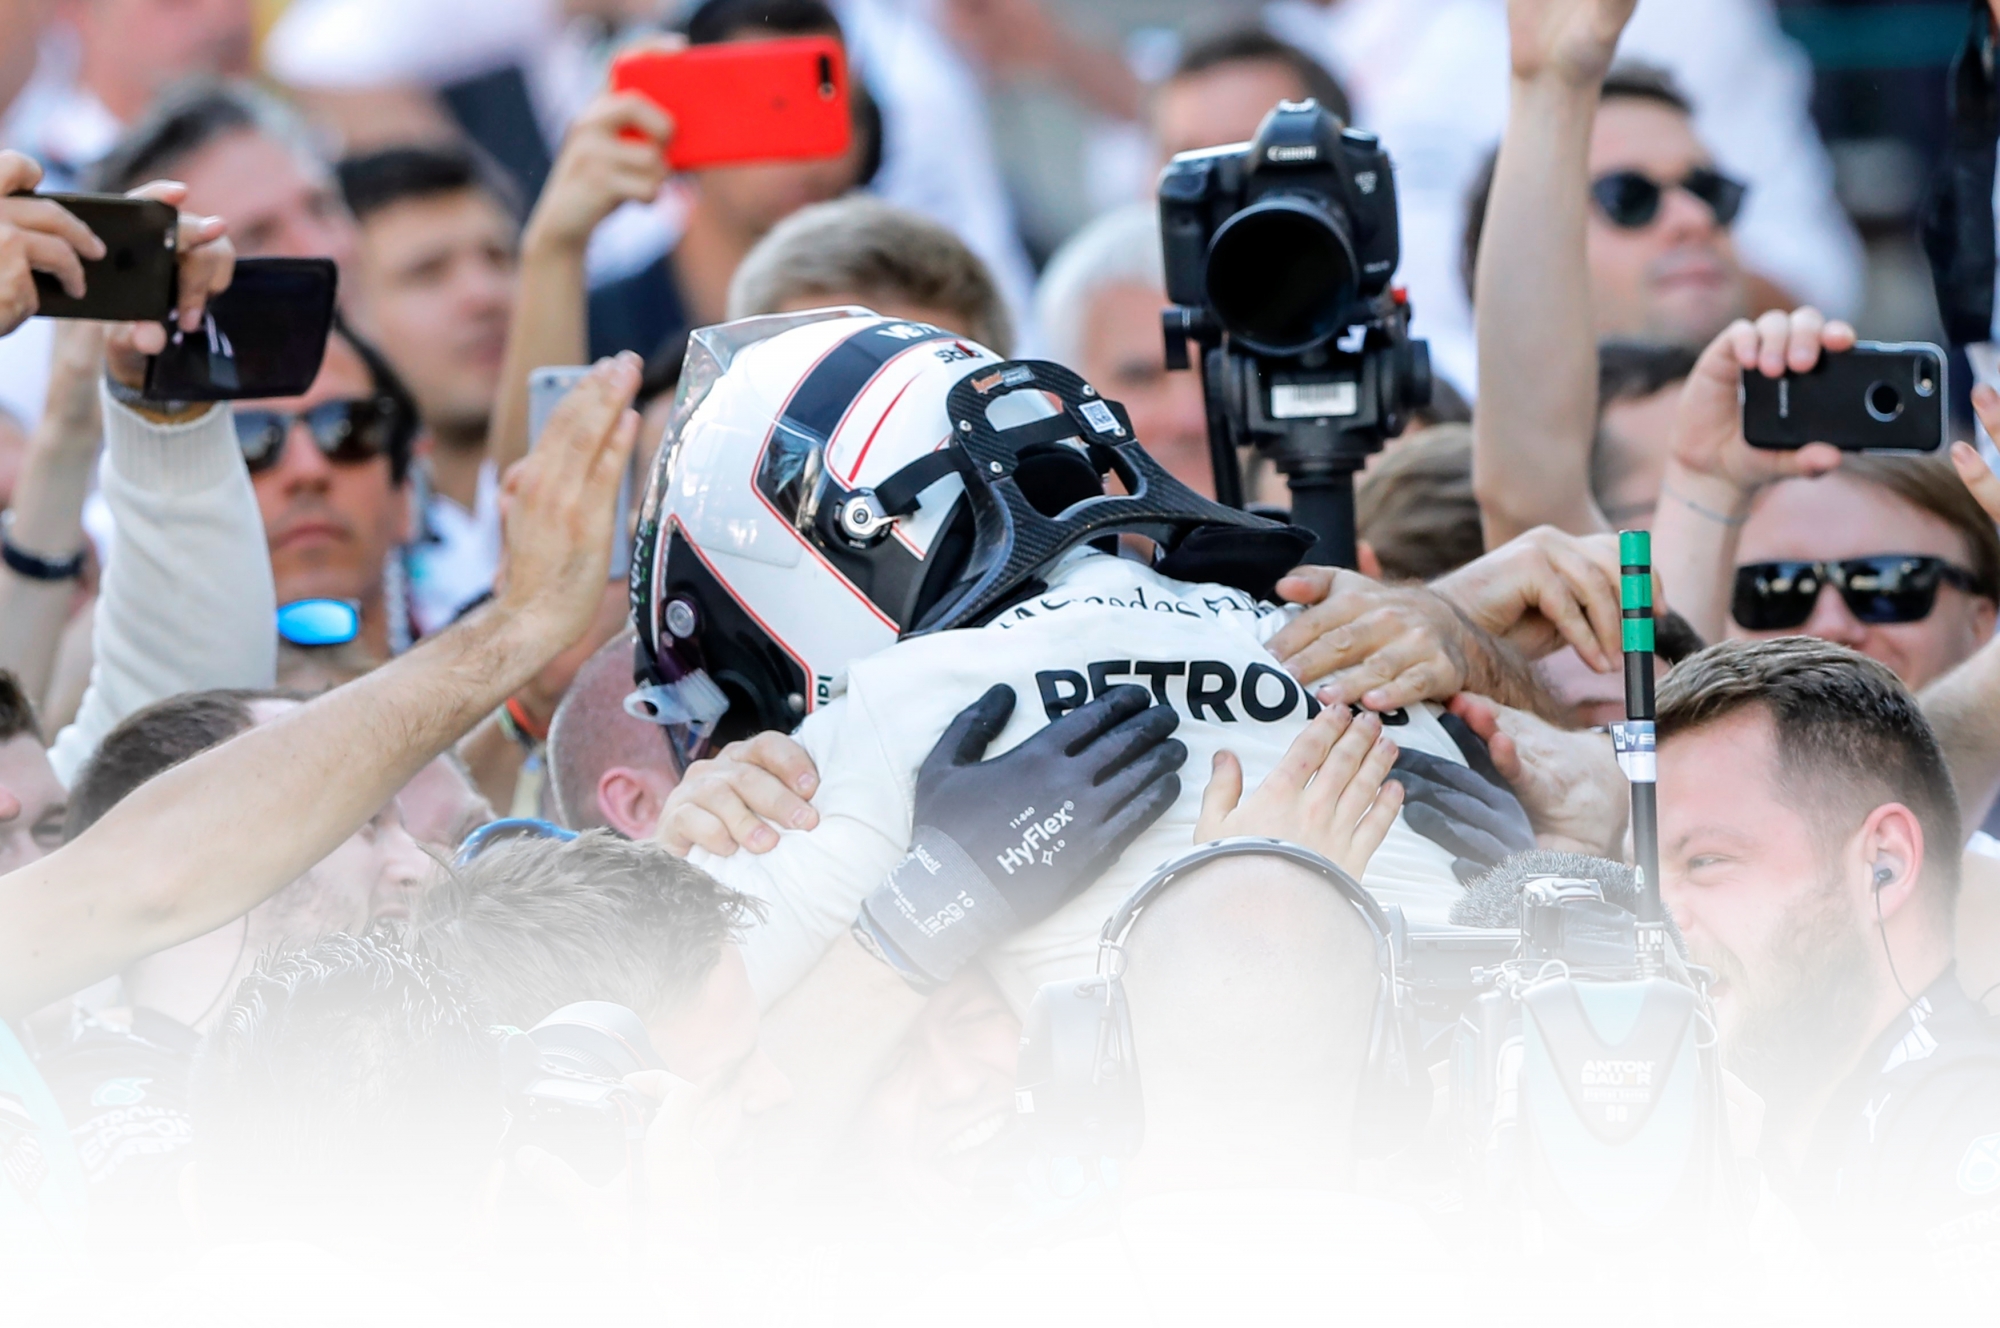 epa05937167 Finnish Formula One driver Valtteri Bottas (C) of Mercedes AMG GP celebrates with team members after winning the Formula One Grand Prix of Russia at the Sochi Autodrom circuit, in Sochi, Russia, 30 April 2017.  EPA/VALDRIN XHEMAJ RUSSIA FORMULA ONE GRAND PRIX